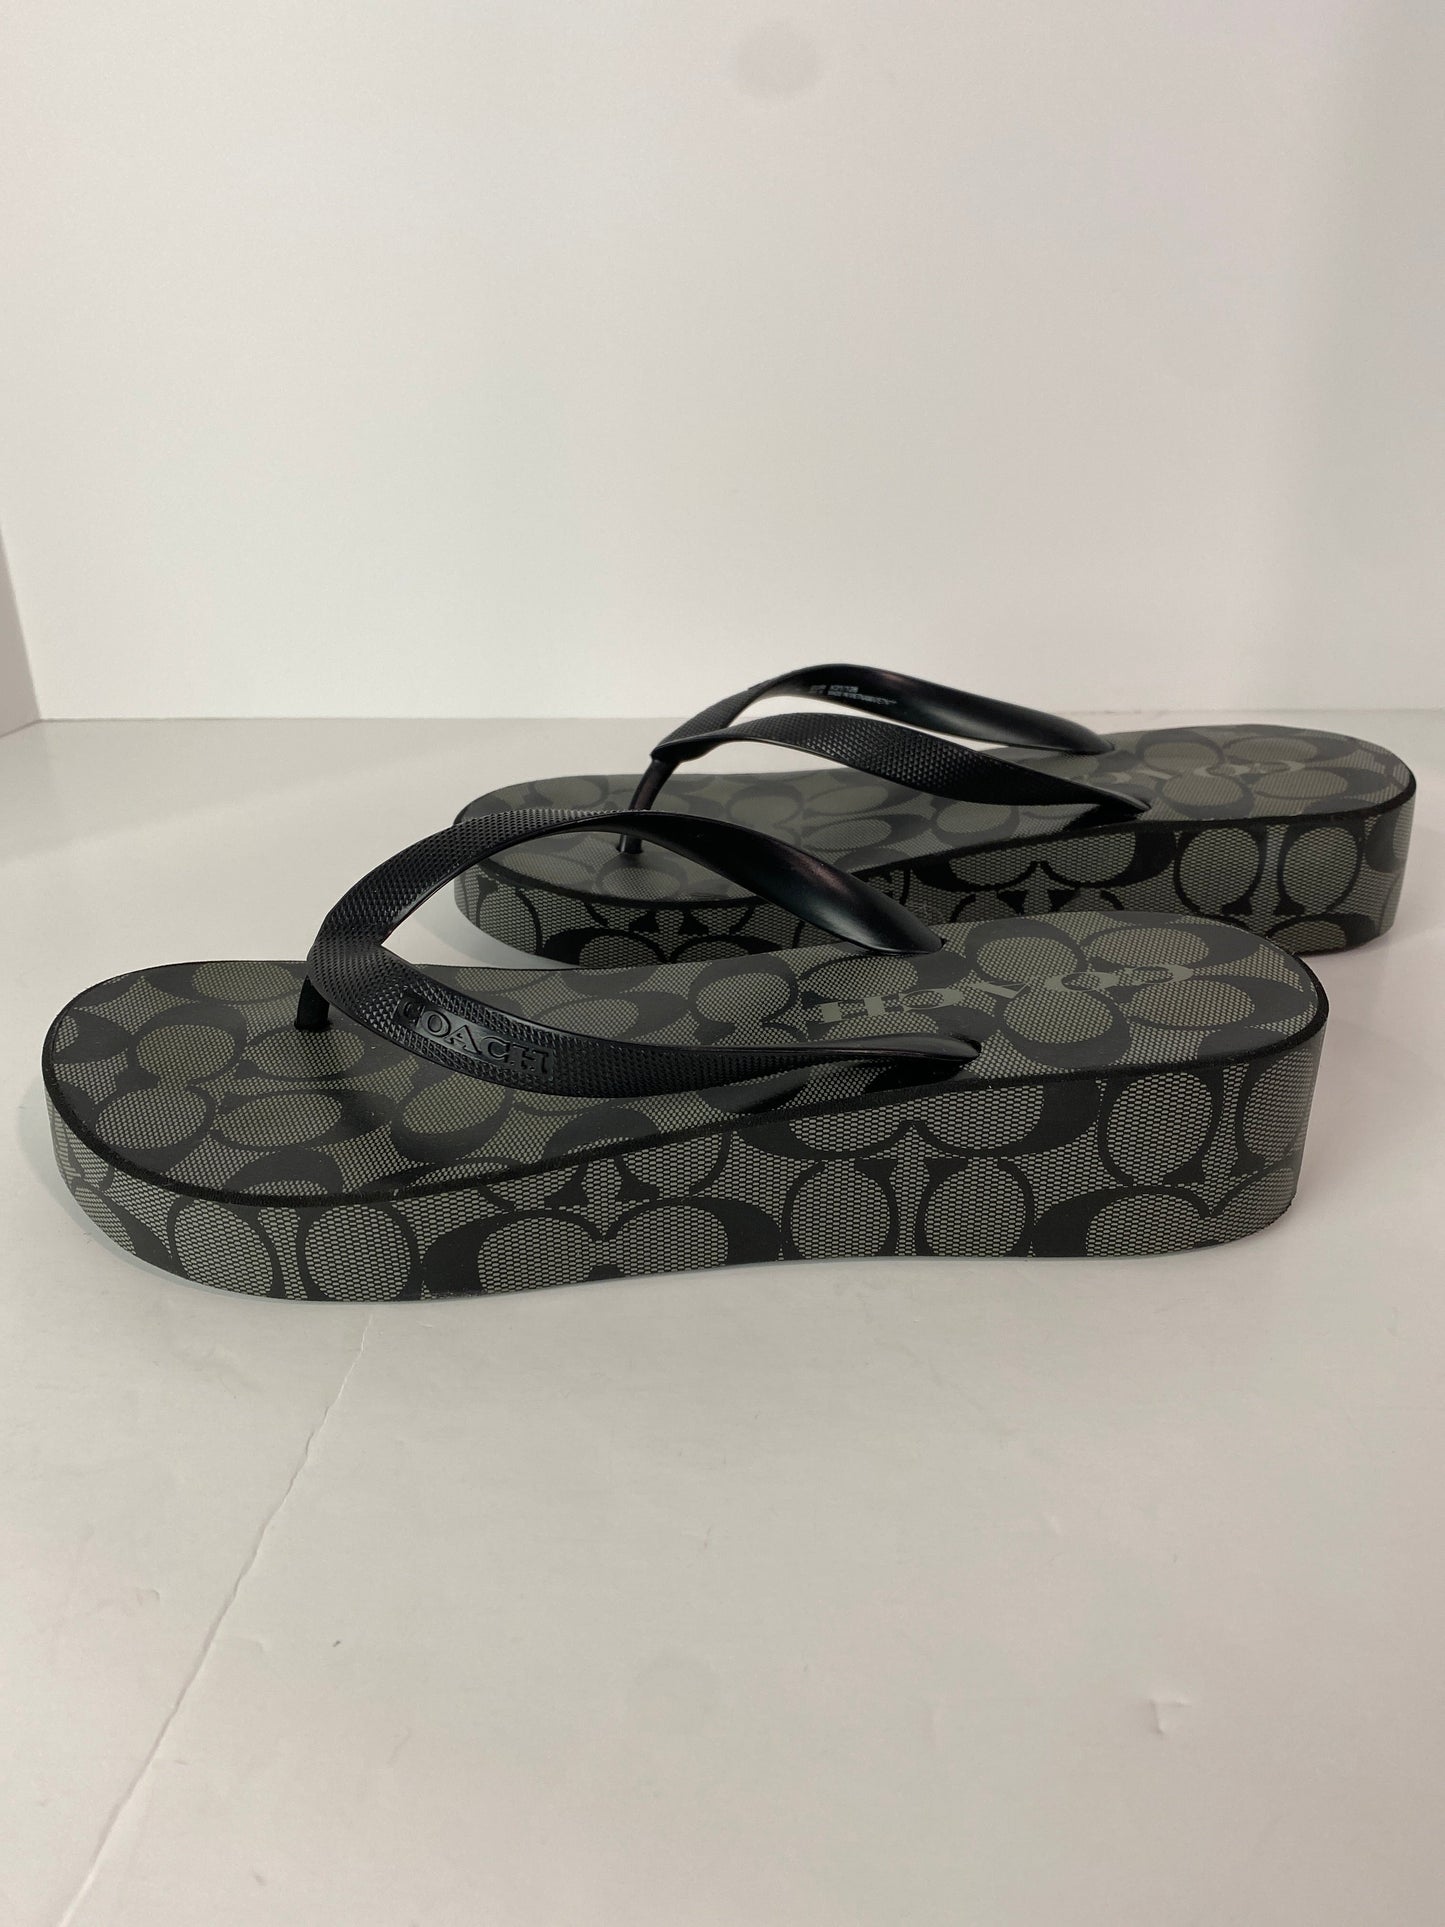 Black Sandals Designer Coach, Size 10